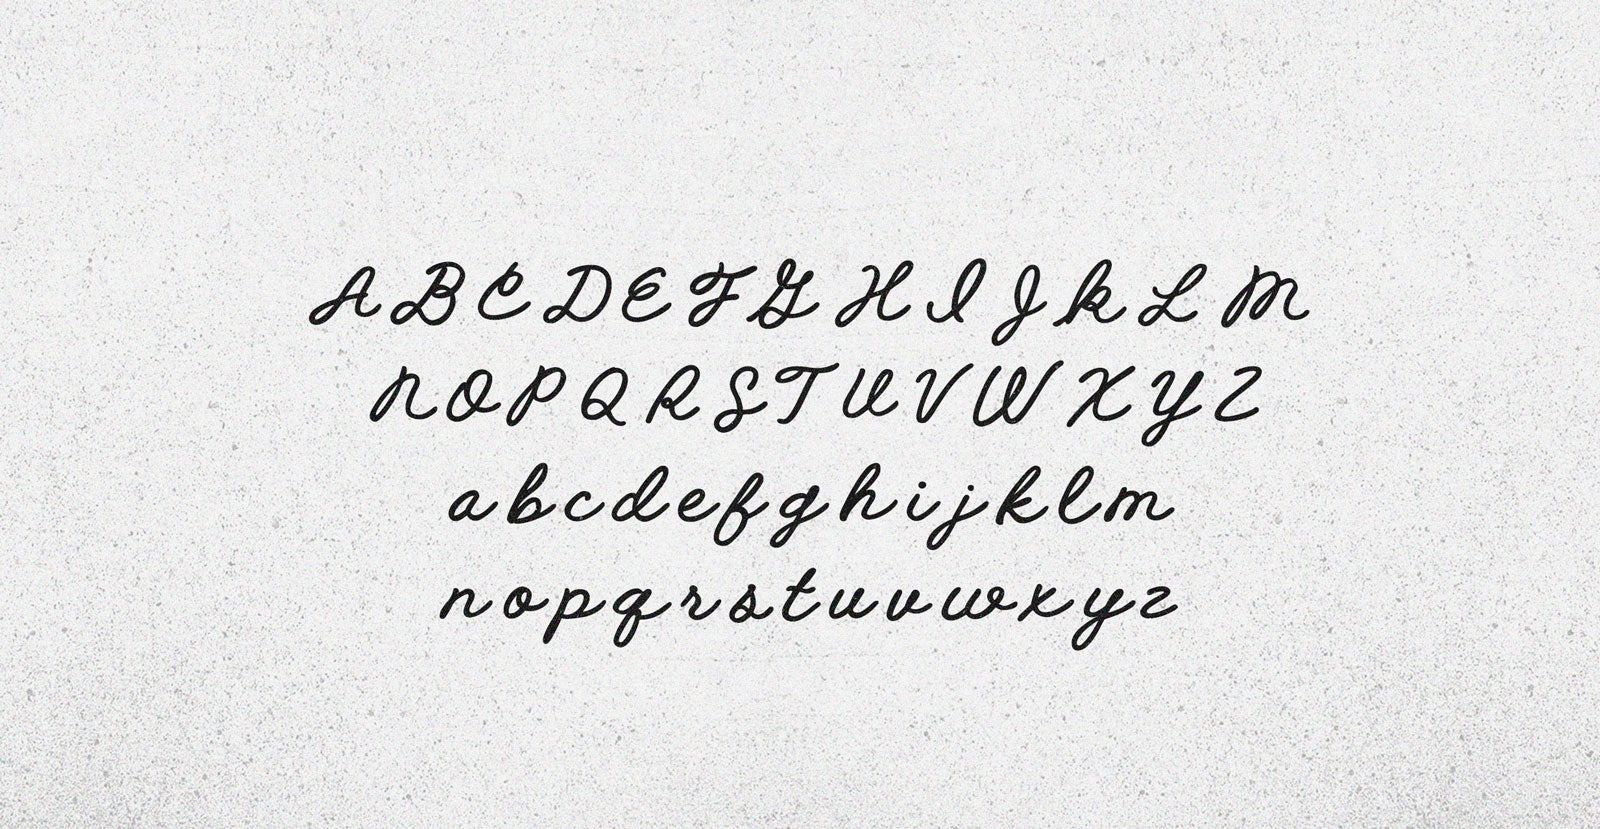 tumblr cursive writing